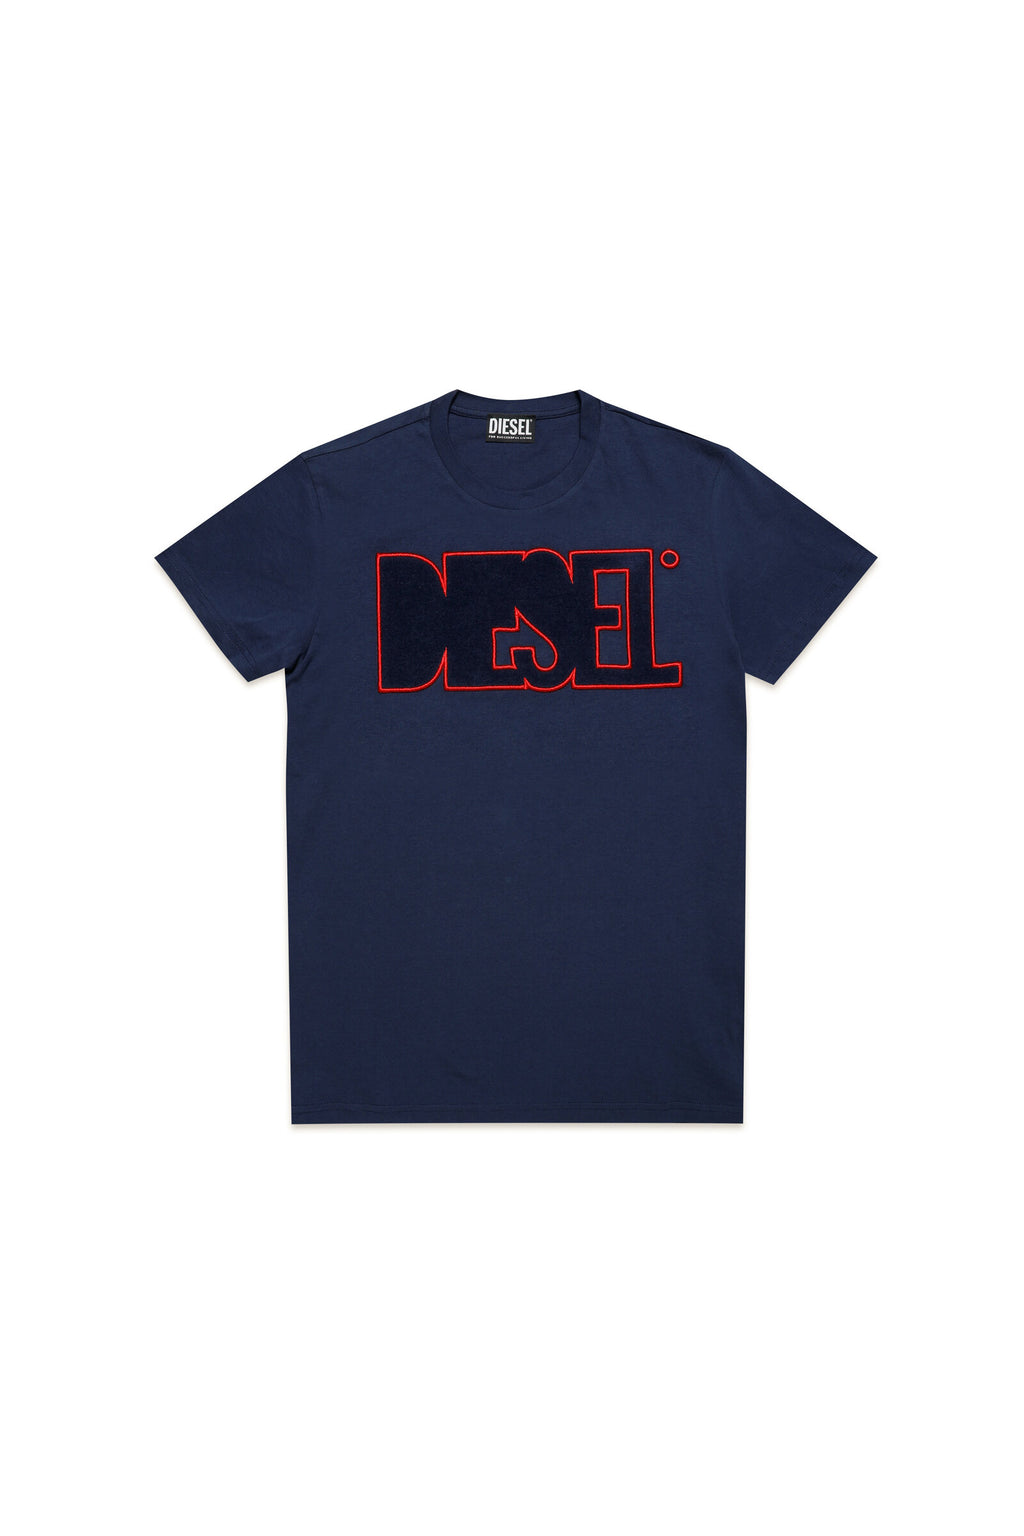 Blue t-shirt with Diesel logo applique